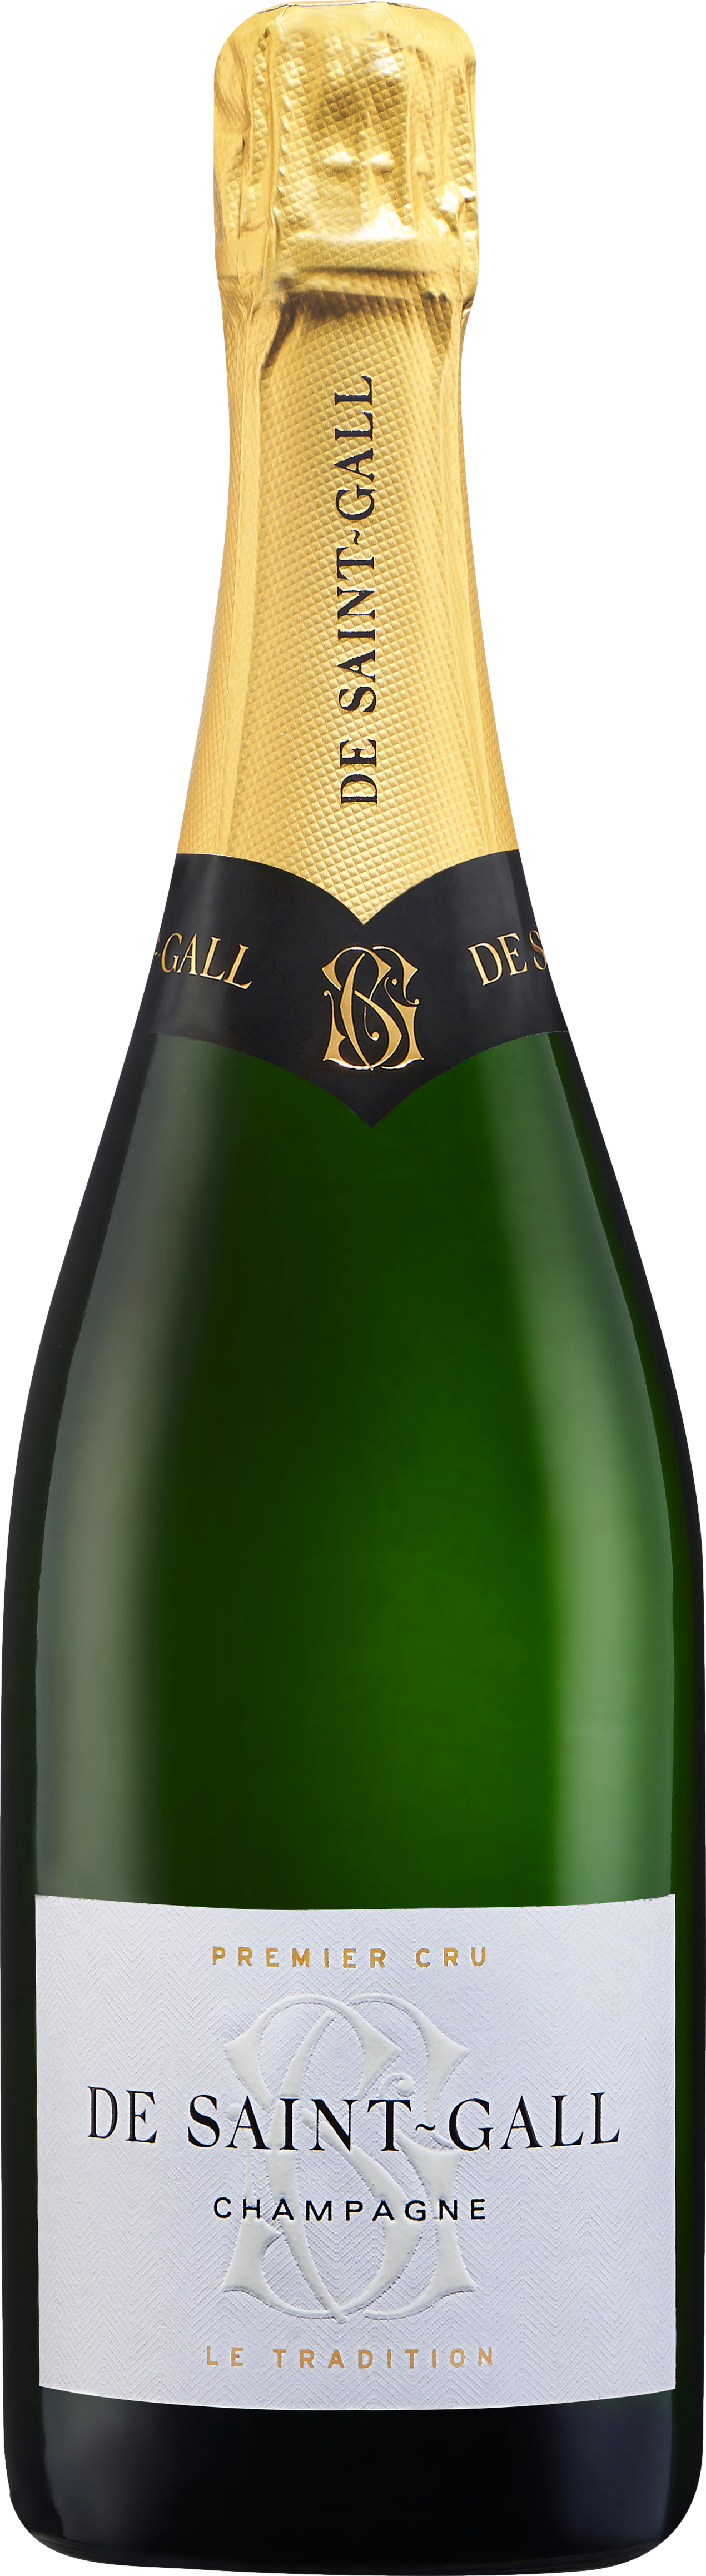 Champagne De Saint Gall Tradition Premier Cru Champagne De Saint Gall 8wines DACH